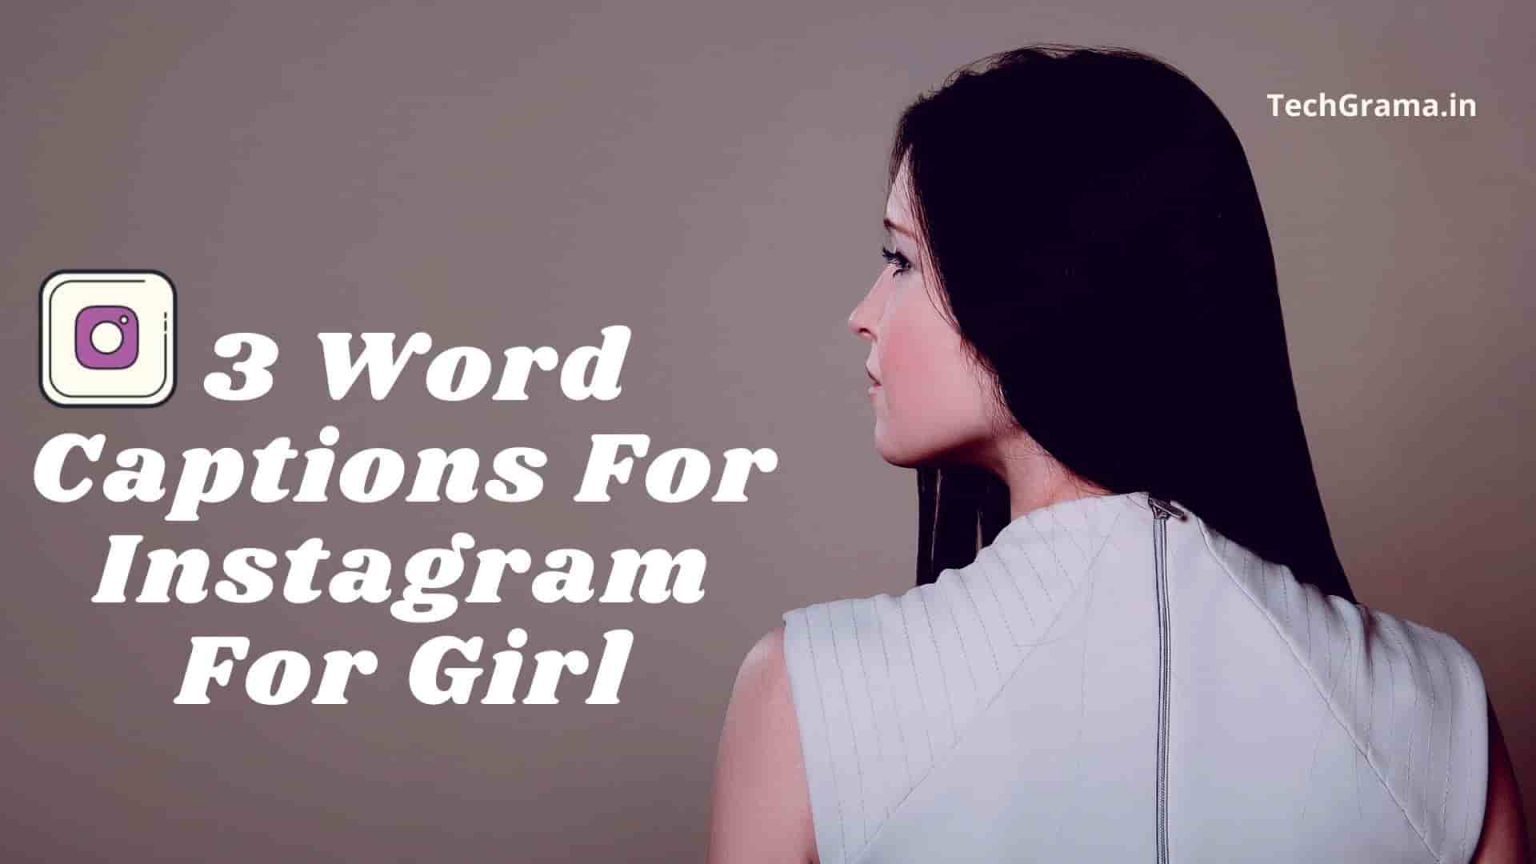 150 Best 3 Word Captions For Instagram Short Insta Captions For Selfies Techgrama 